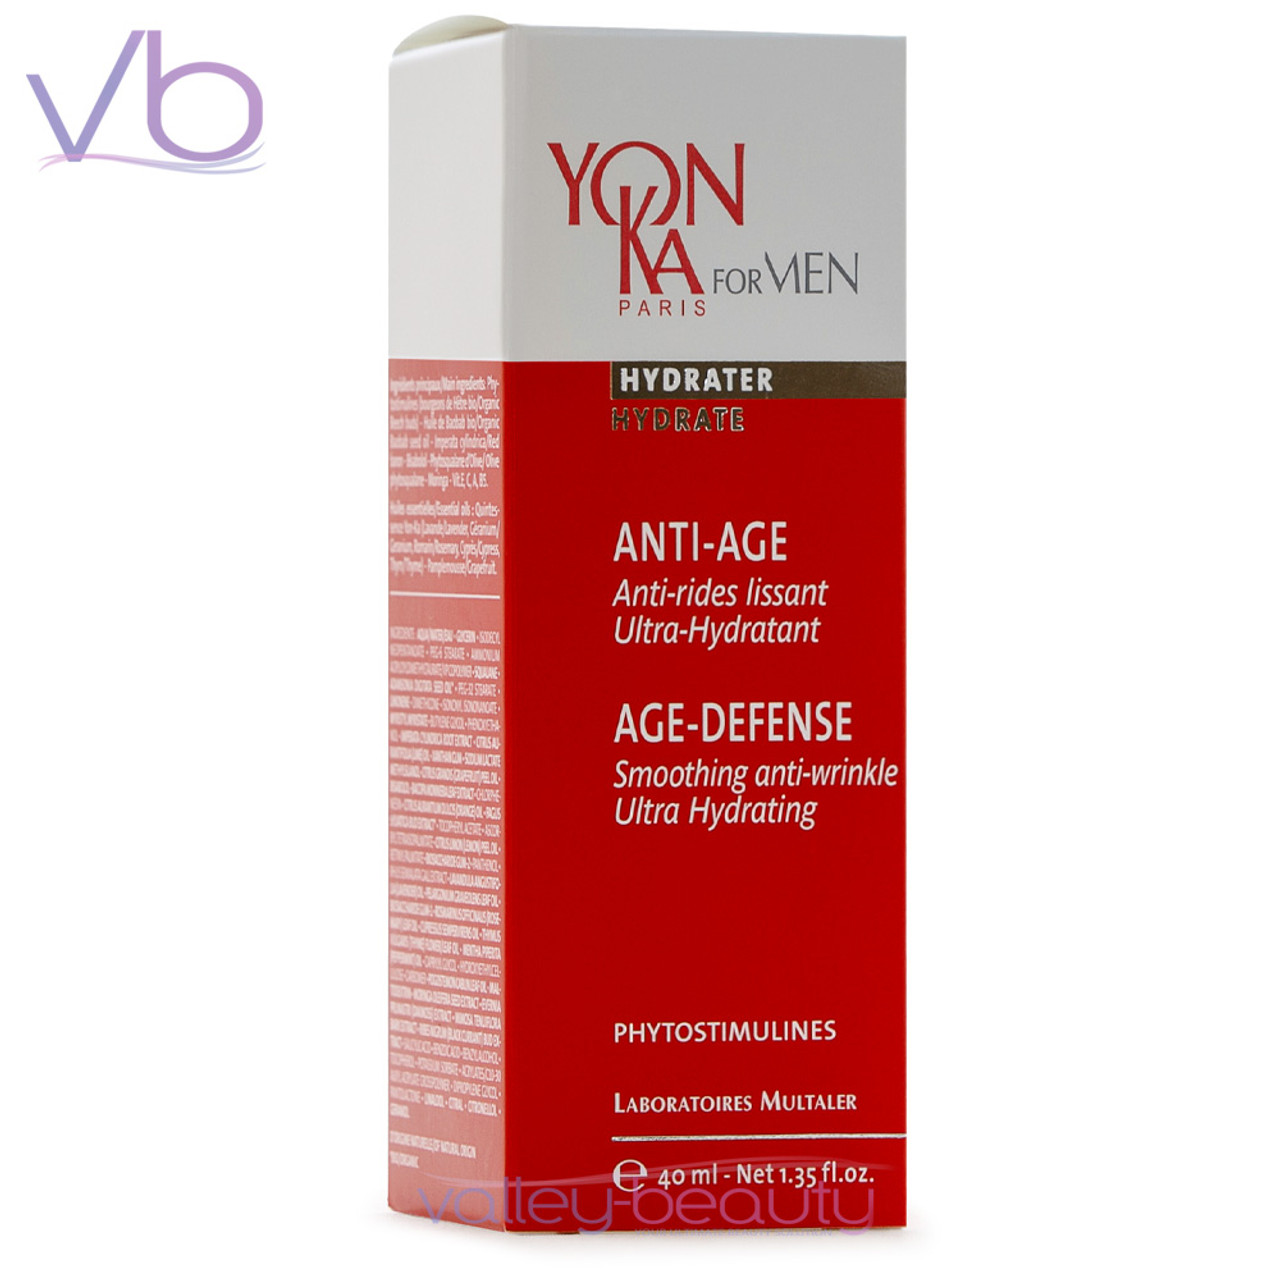 Yonka for Men Age-Defense | Anti-Aging, Hydrating Wrinkle Cream, 1.35 fl.oz. EXP 04/2025